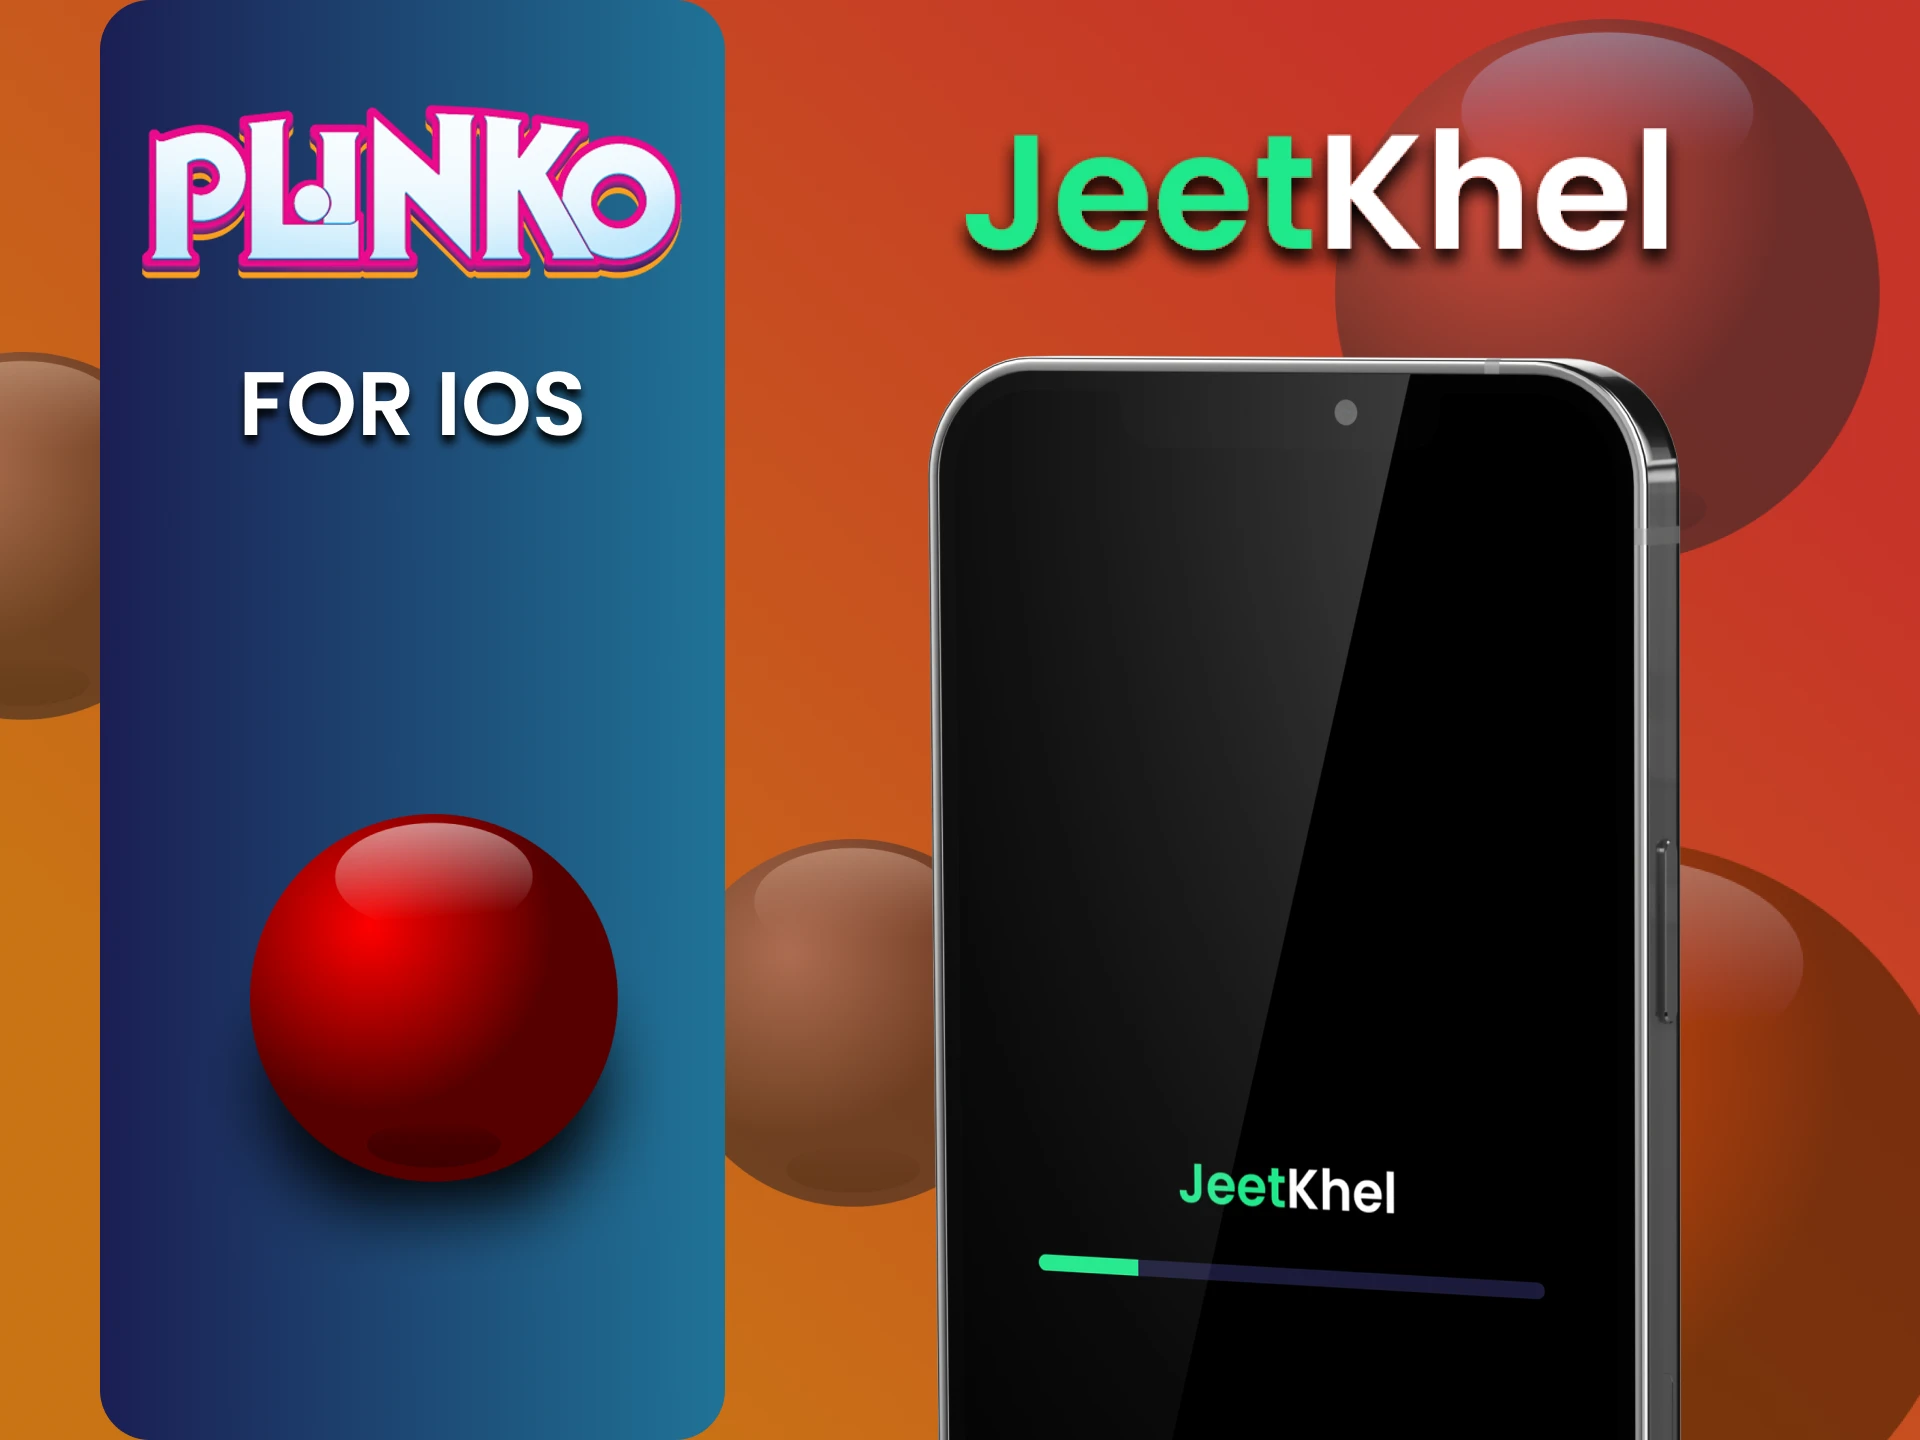 Download JeetKhel app to play Plinko on iOS.